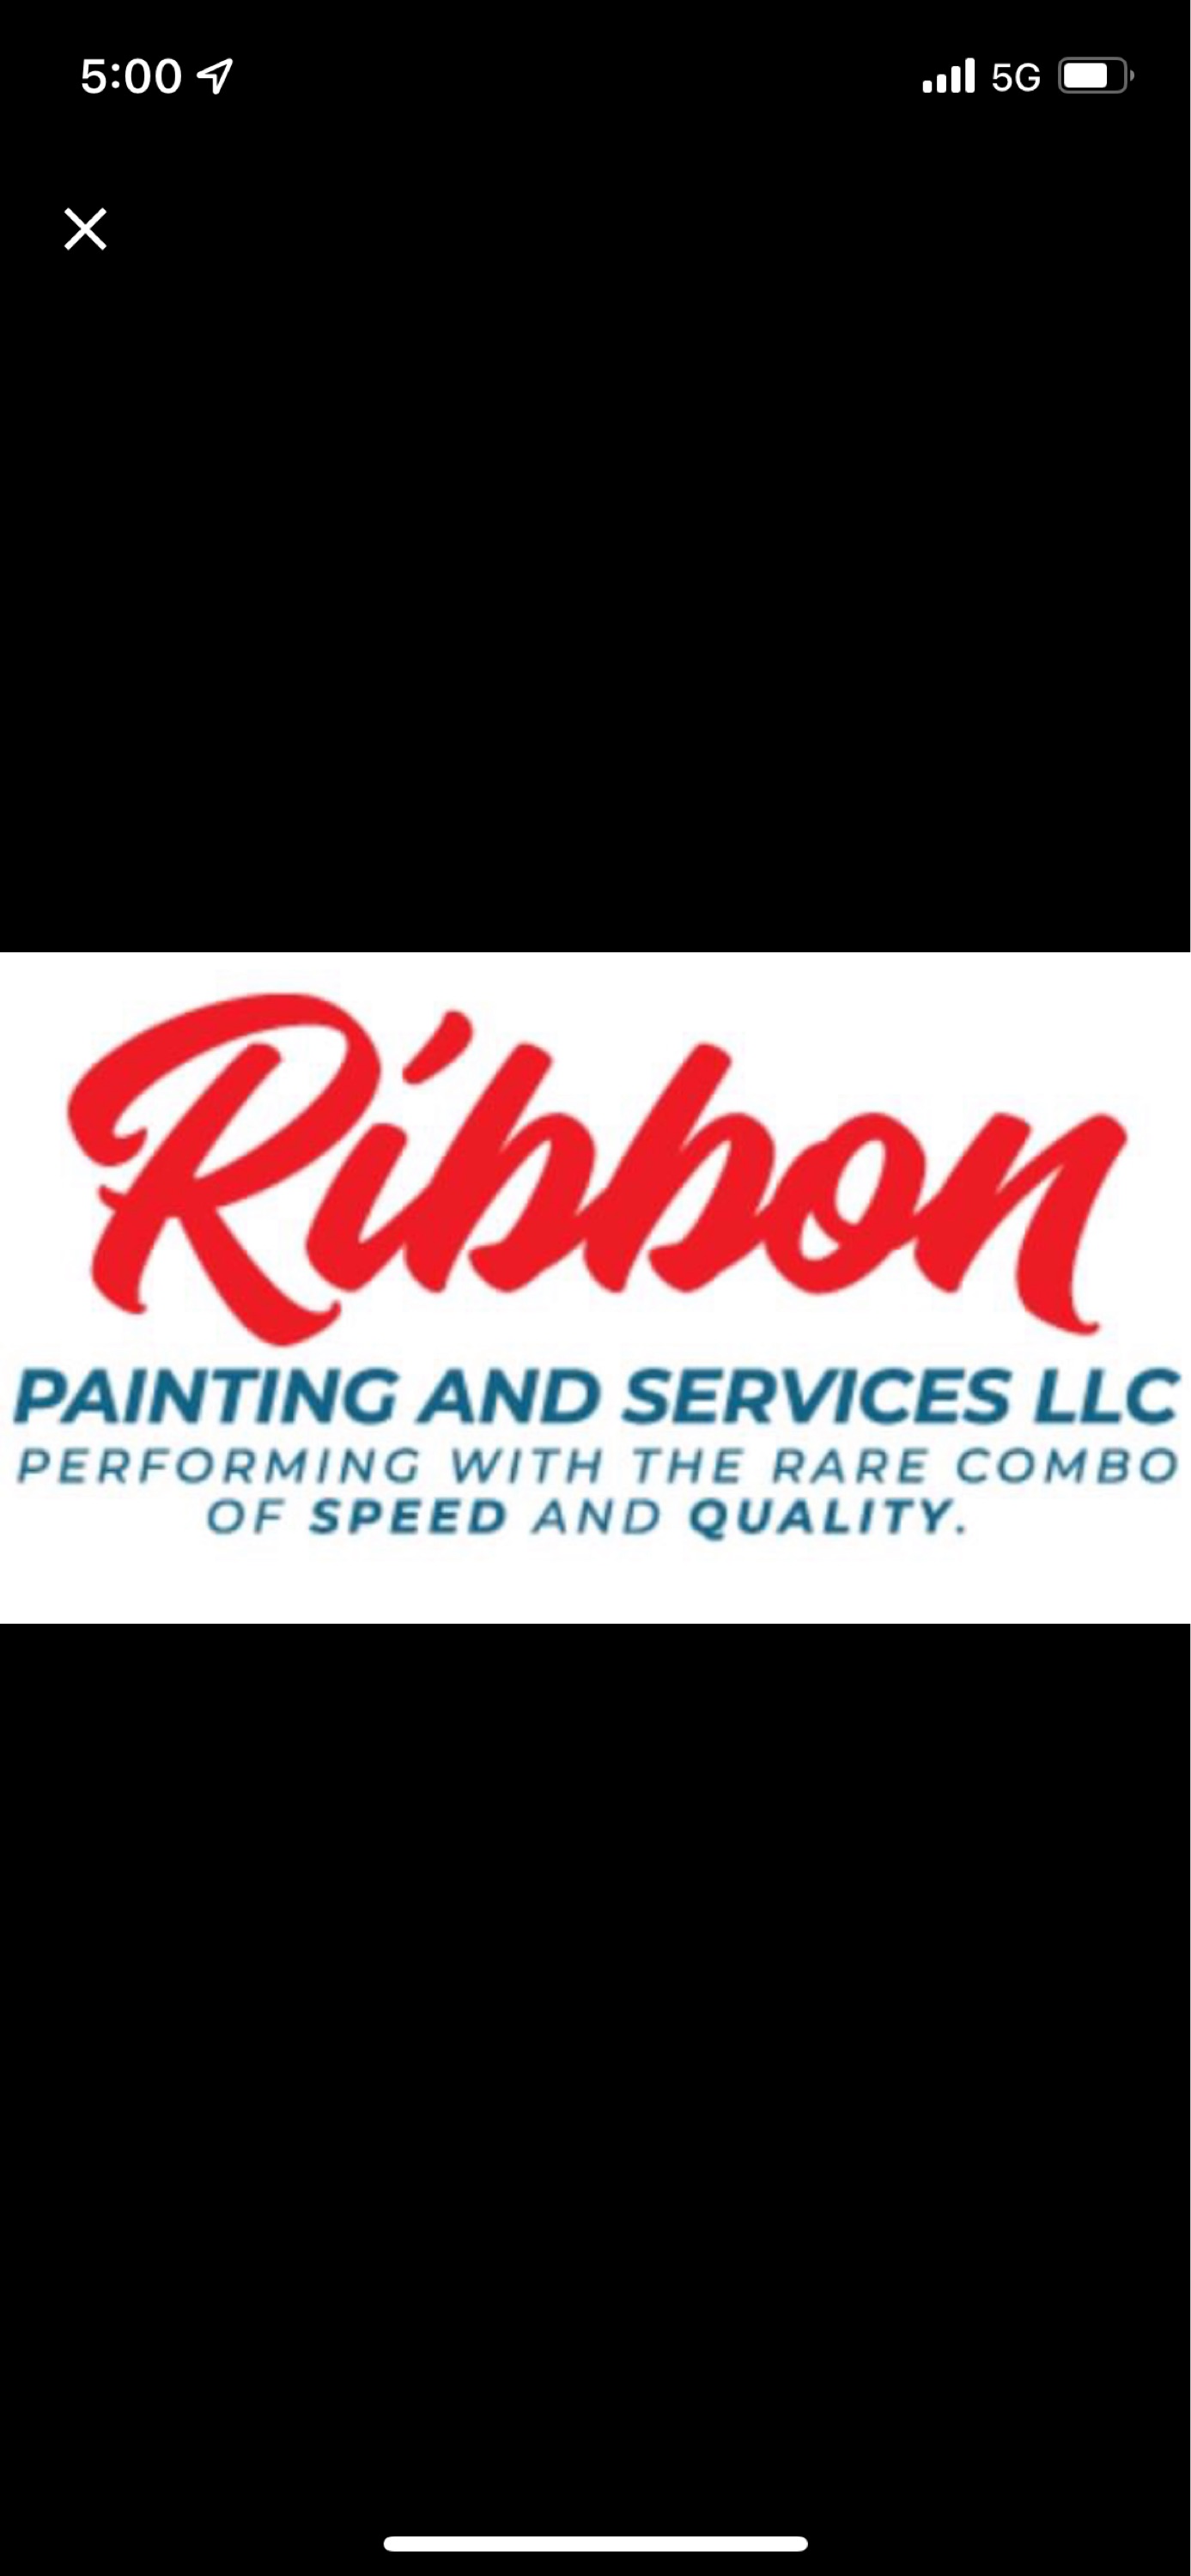 Ribbon Painting and Services, LLC Logo